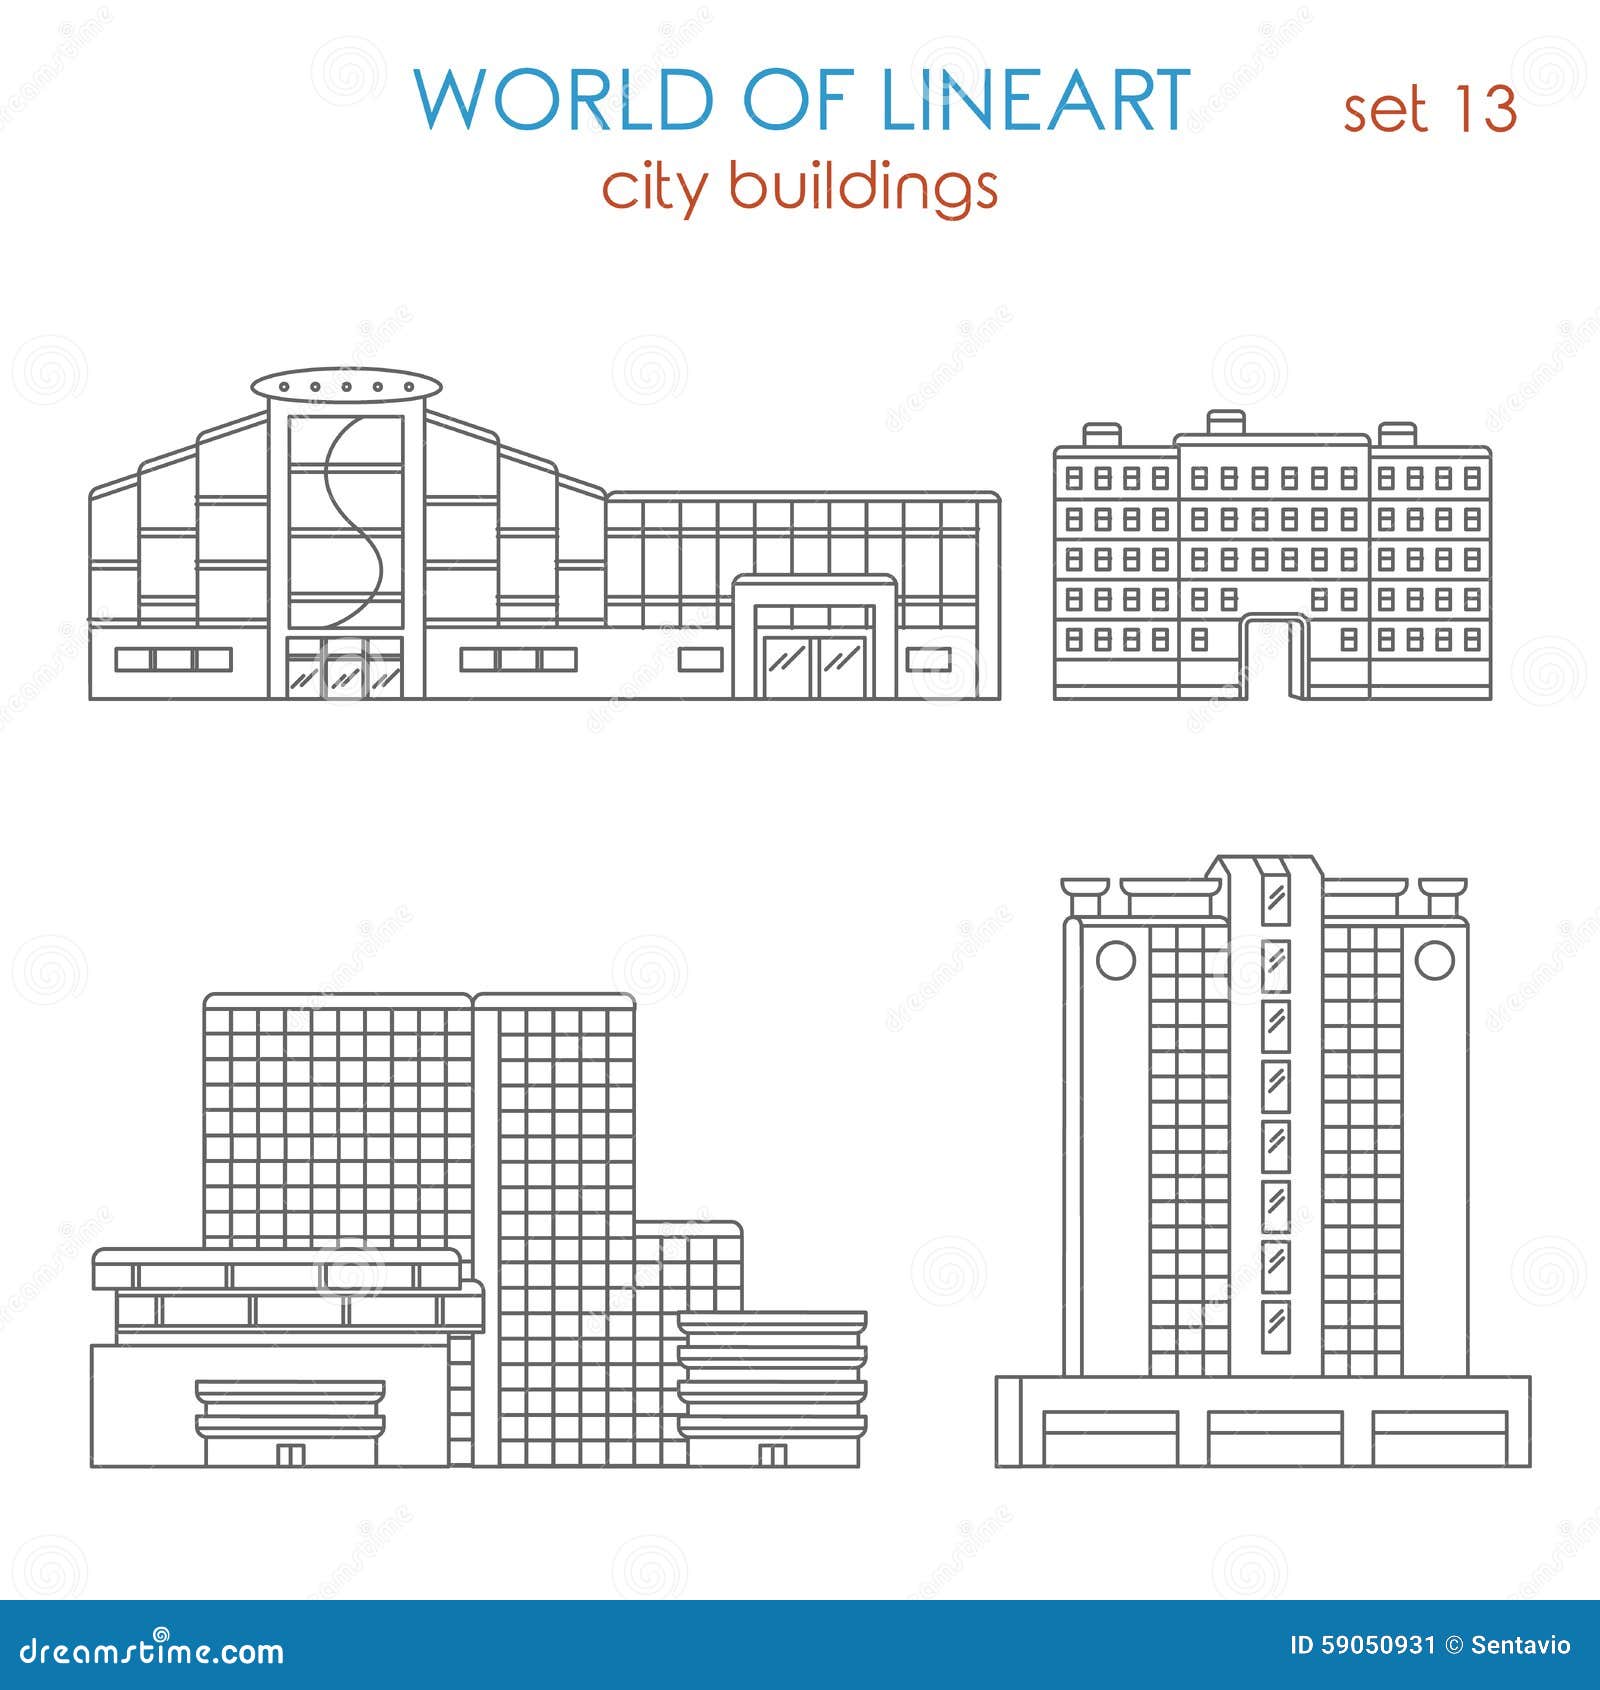 lineart architecture city modern public municipal building mall